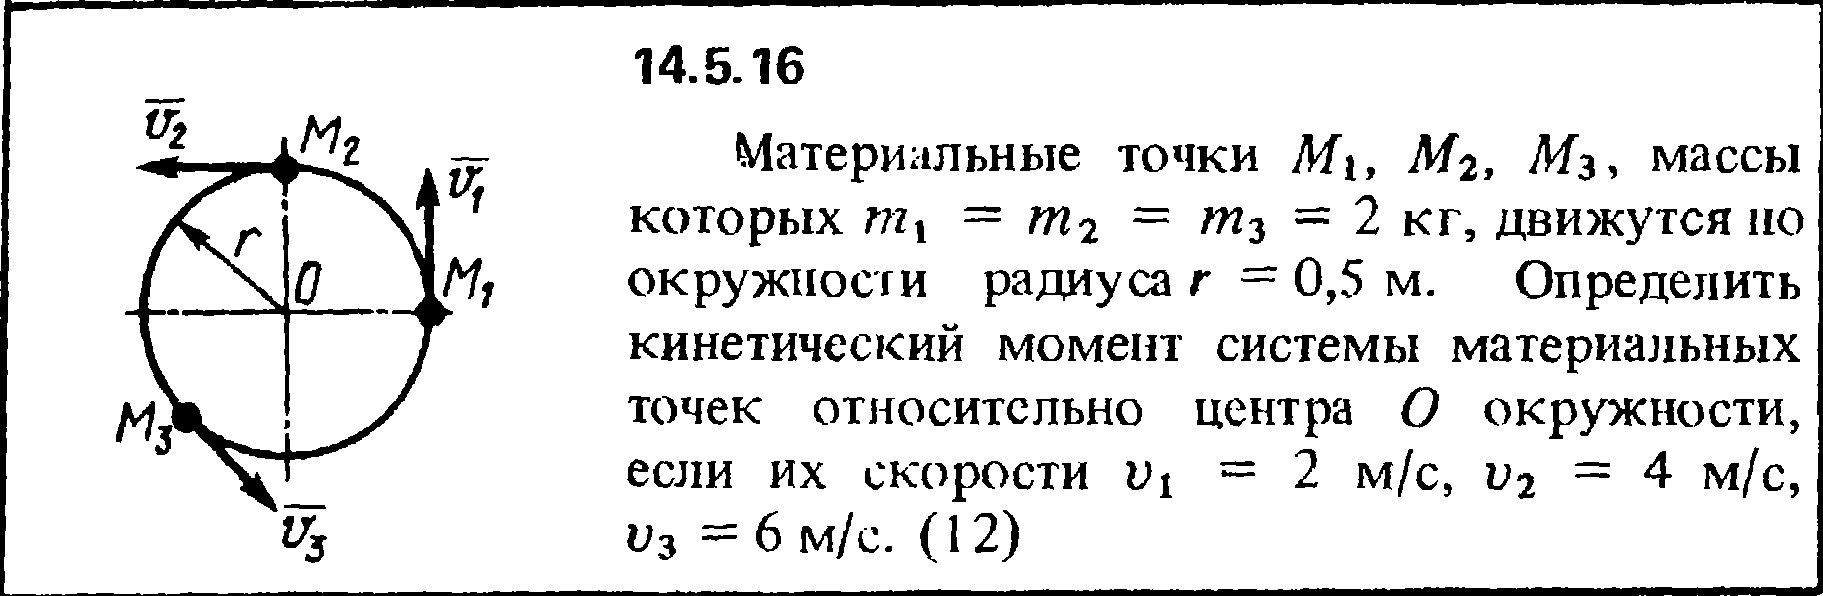 Решение задачи 14.5.16 из сборника Кепе О.Е. 1989 года